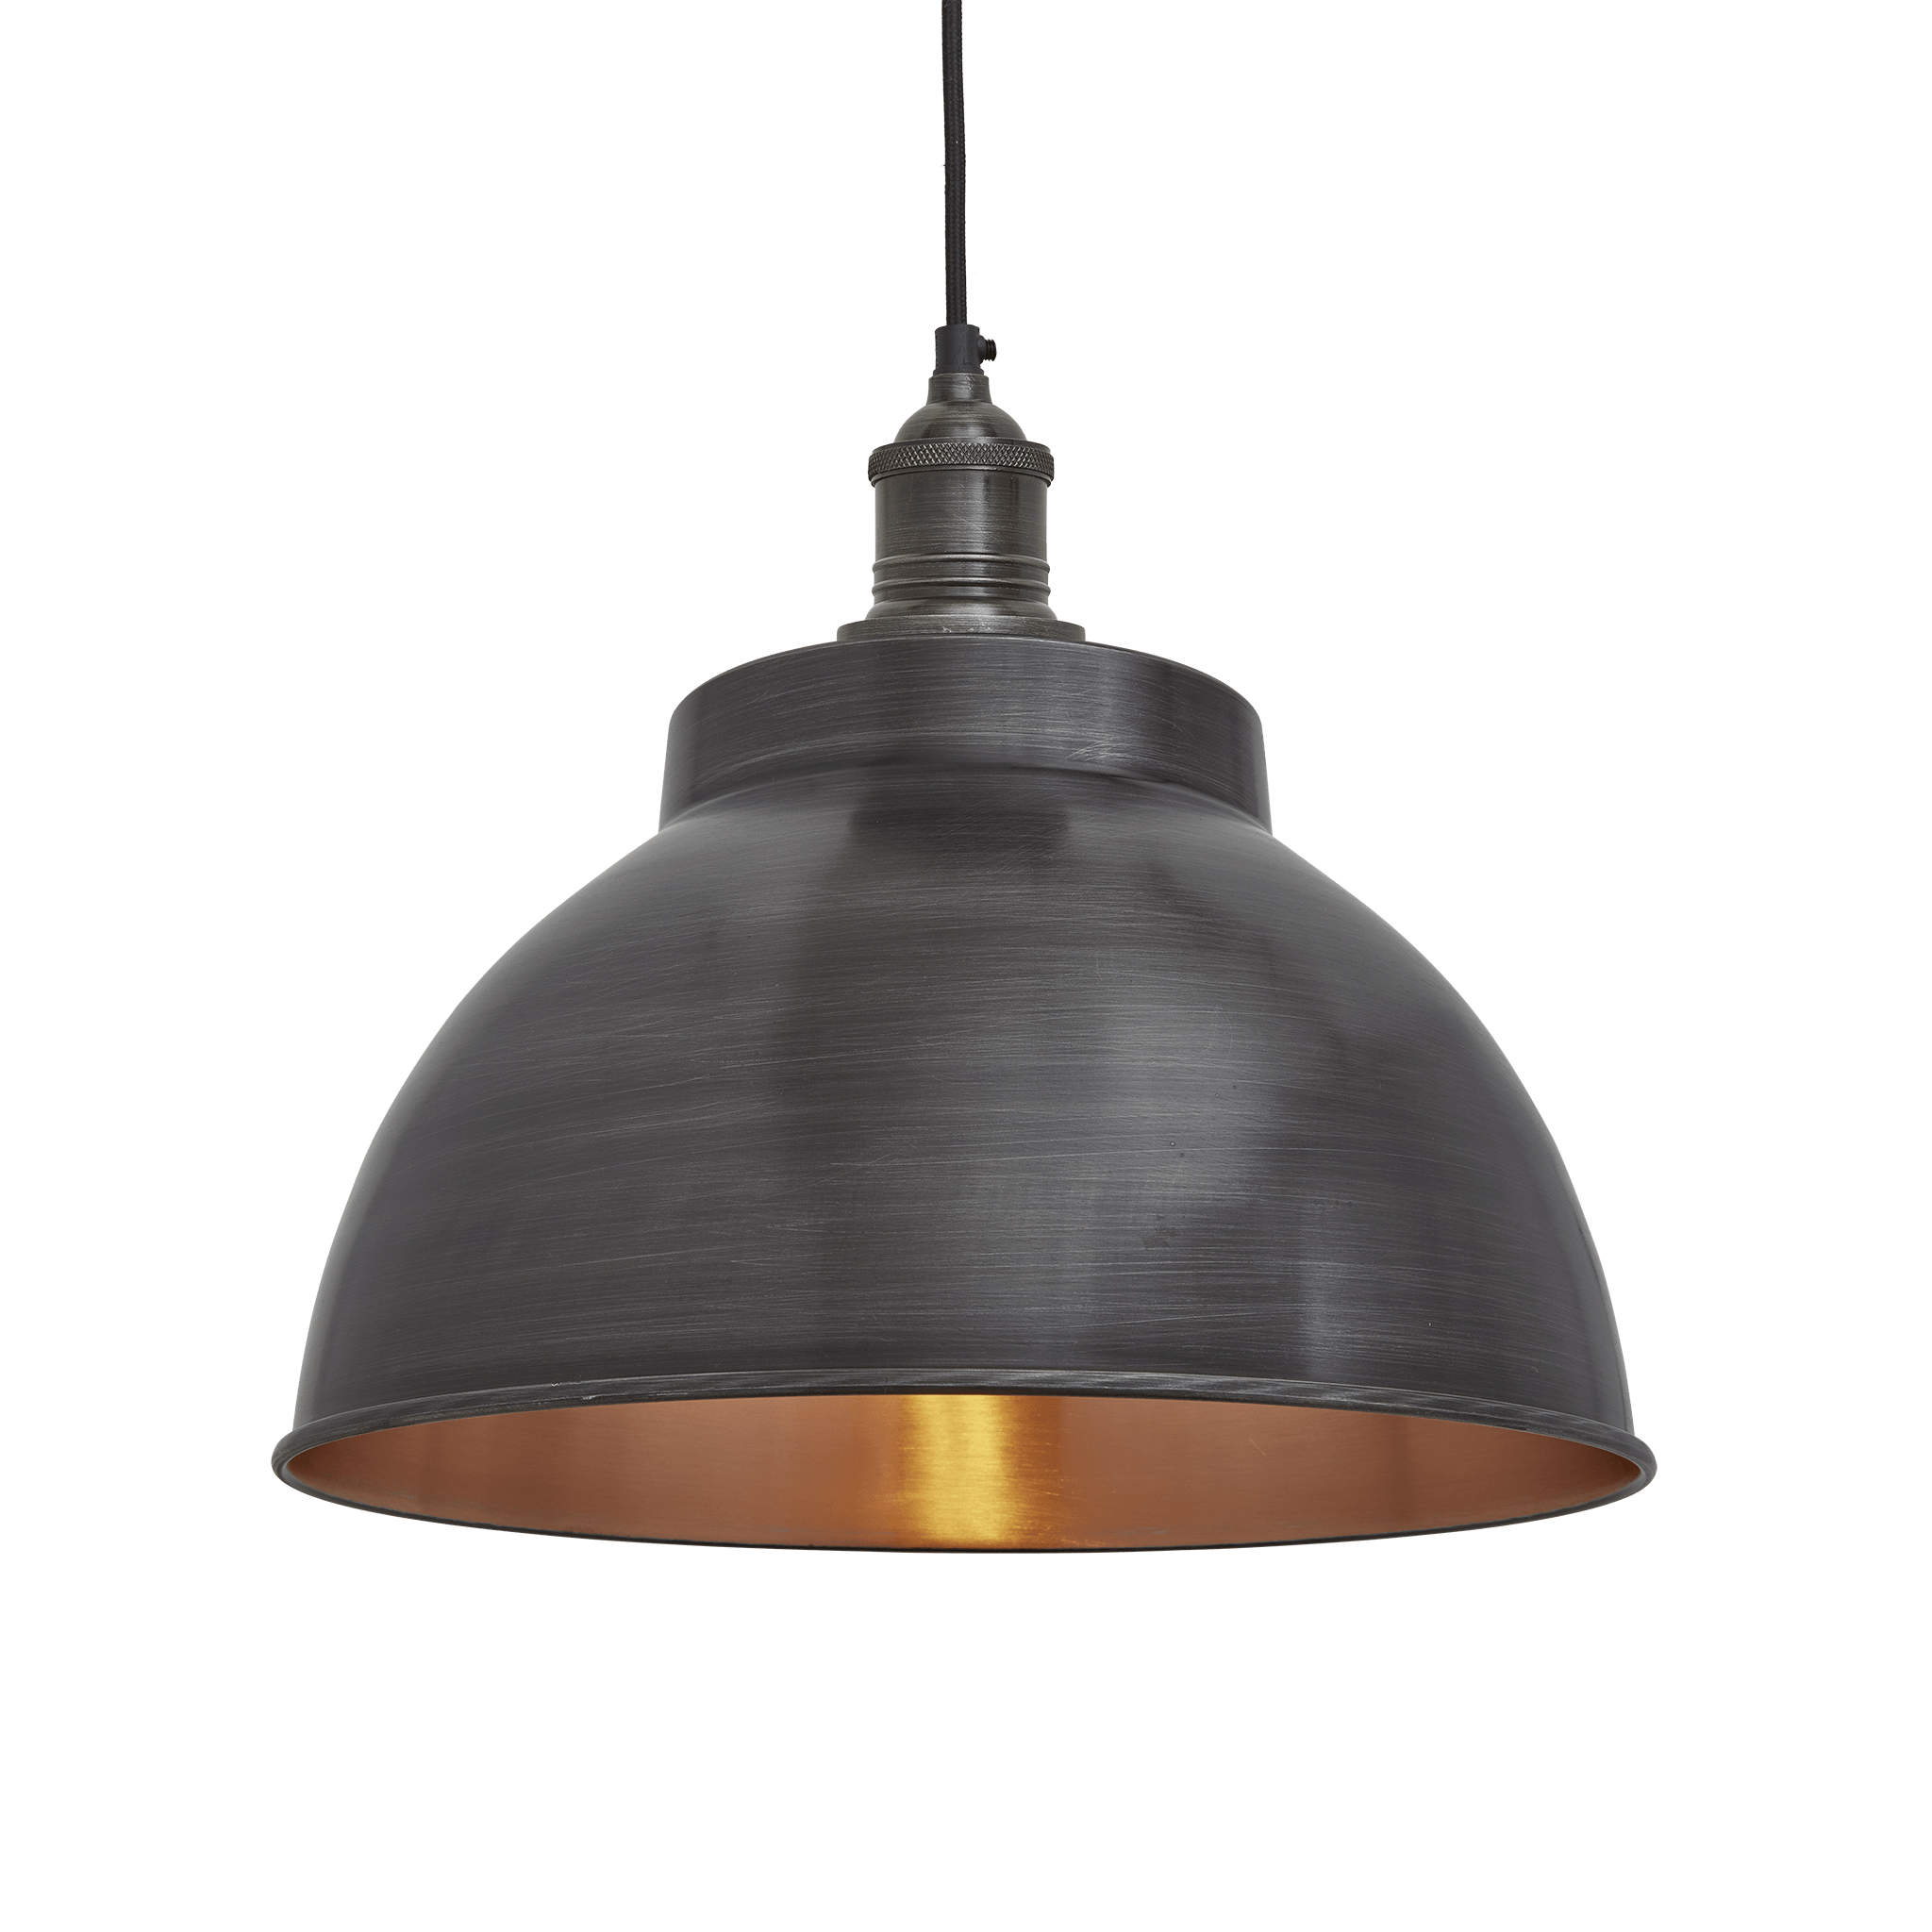 Industville – Brooklyn Dome Pendant – 13 Inch – Ceiling Light – Light Shade – Black / Copper Colour – Pewter / Copper / Brass Material – 30.5 CM X 33 CM X 33 CM